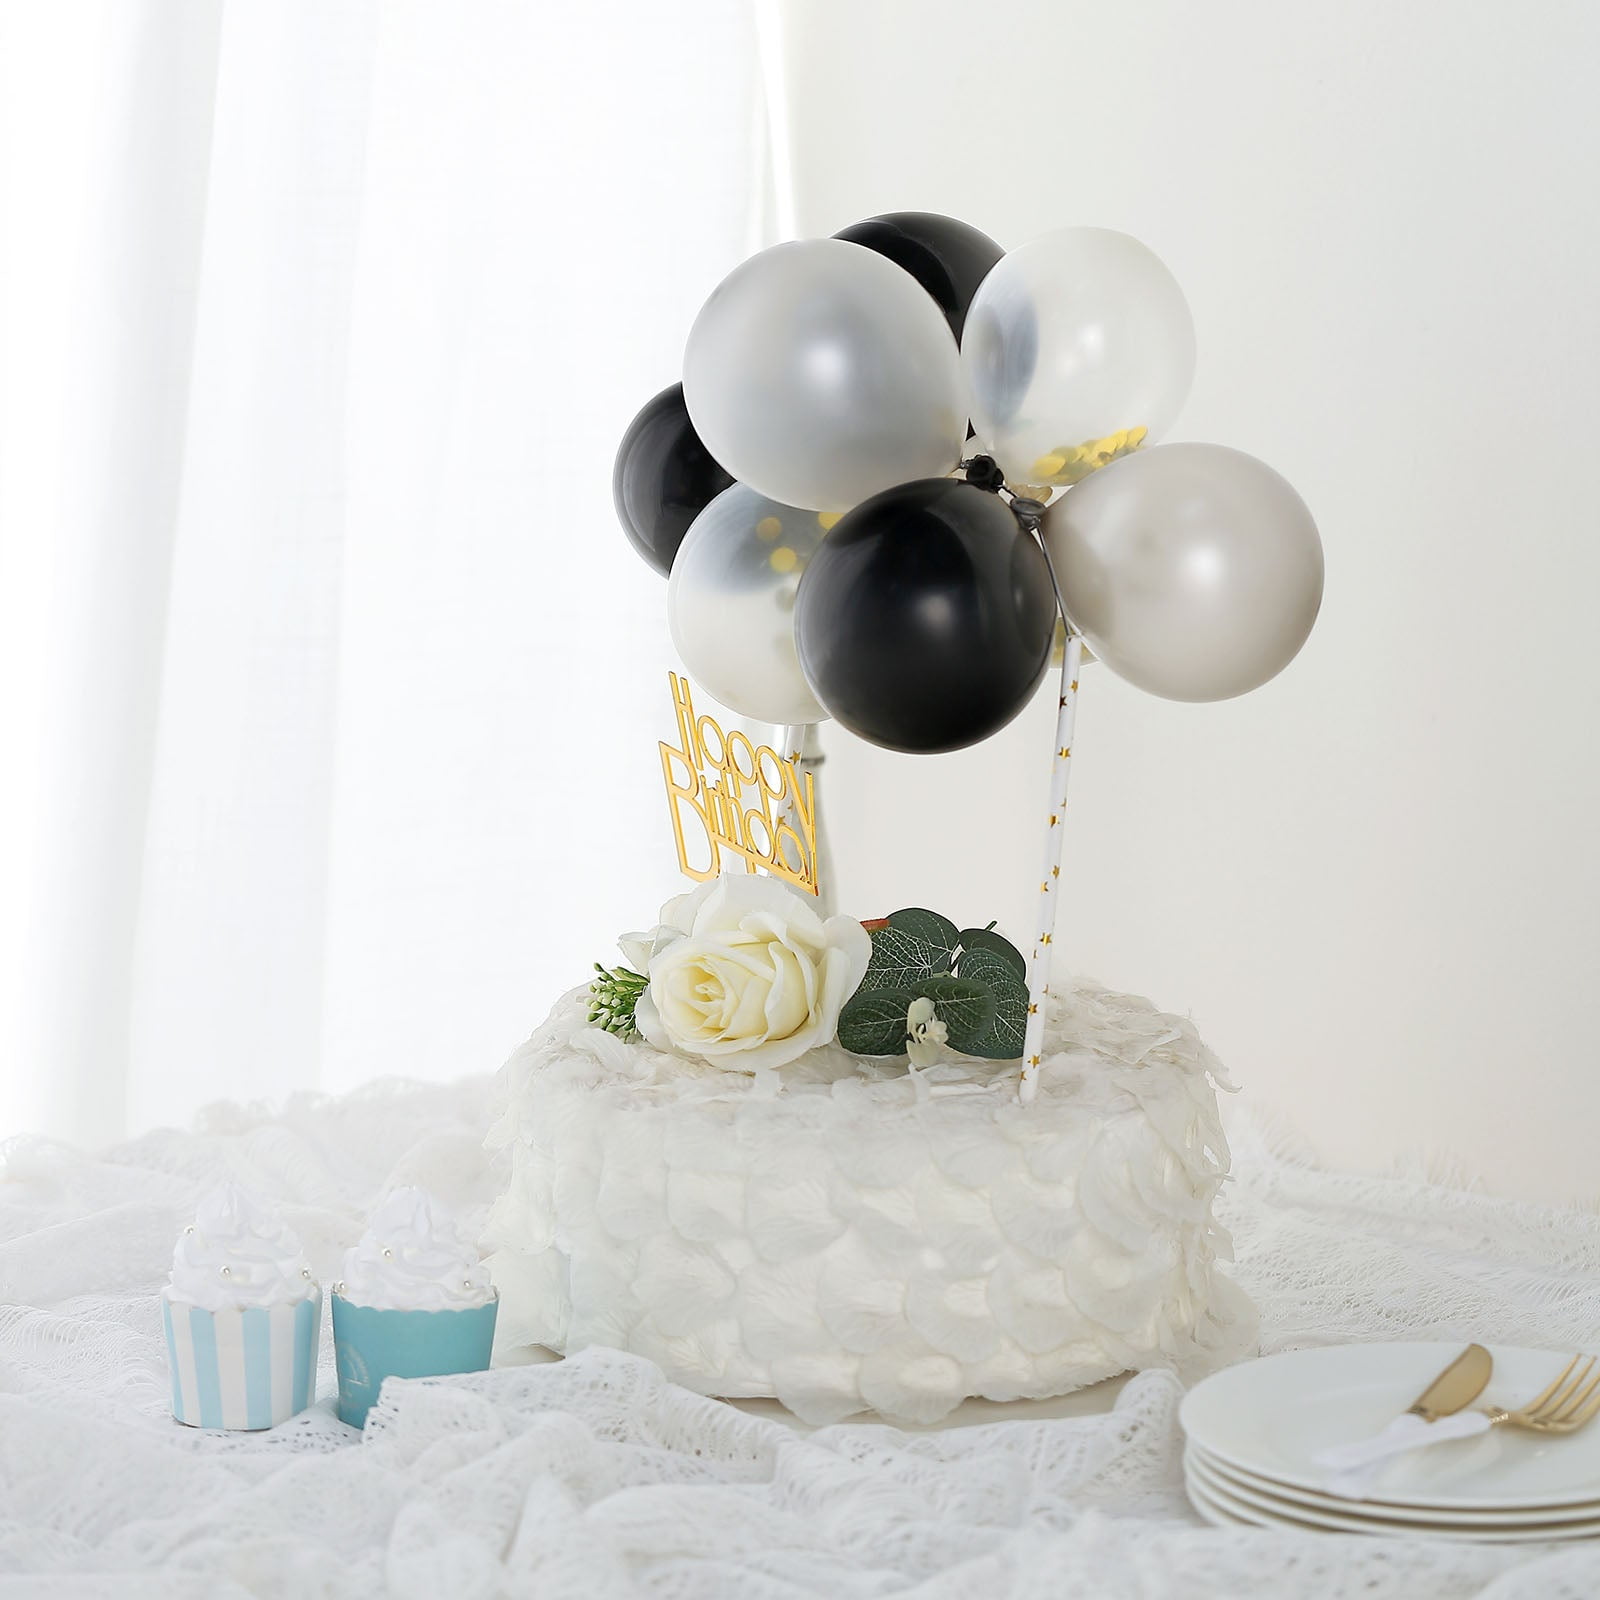  33 pcs Mini Balloon Cake Topper Foam Ball, DaKuan Gold Balls  for Cake Decoration, Cake Ball, Cake Cards, Anniversaries, Graduation  Ceremonies, Cake Decorations, Parties(Black, White, Gold) : Grocery &  Gourmet Food